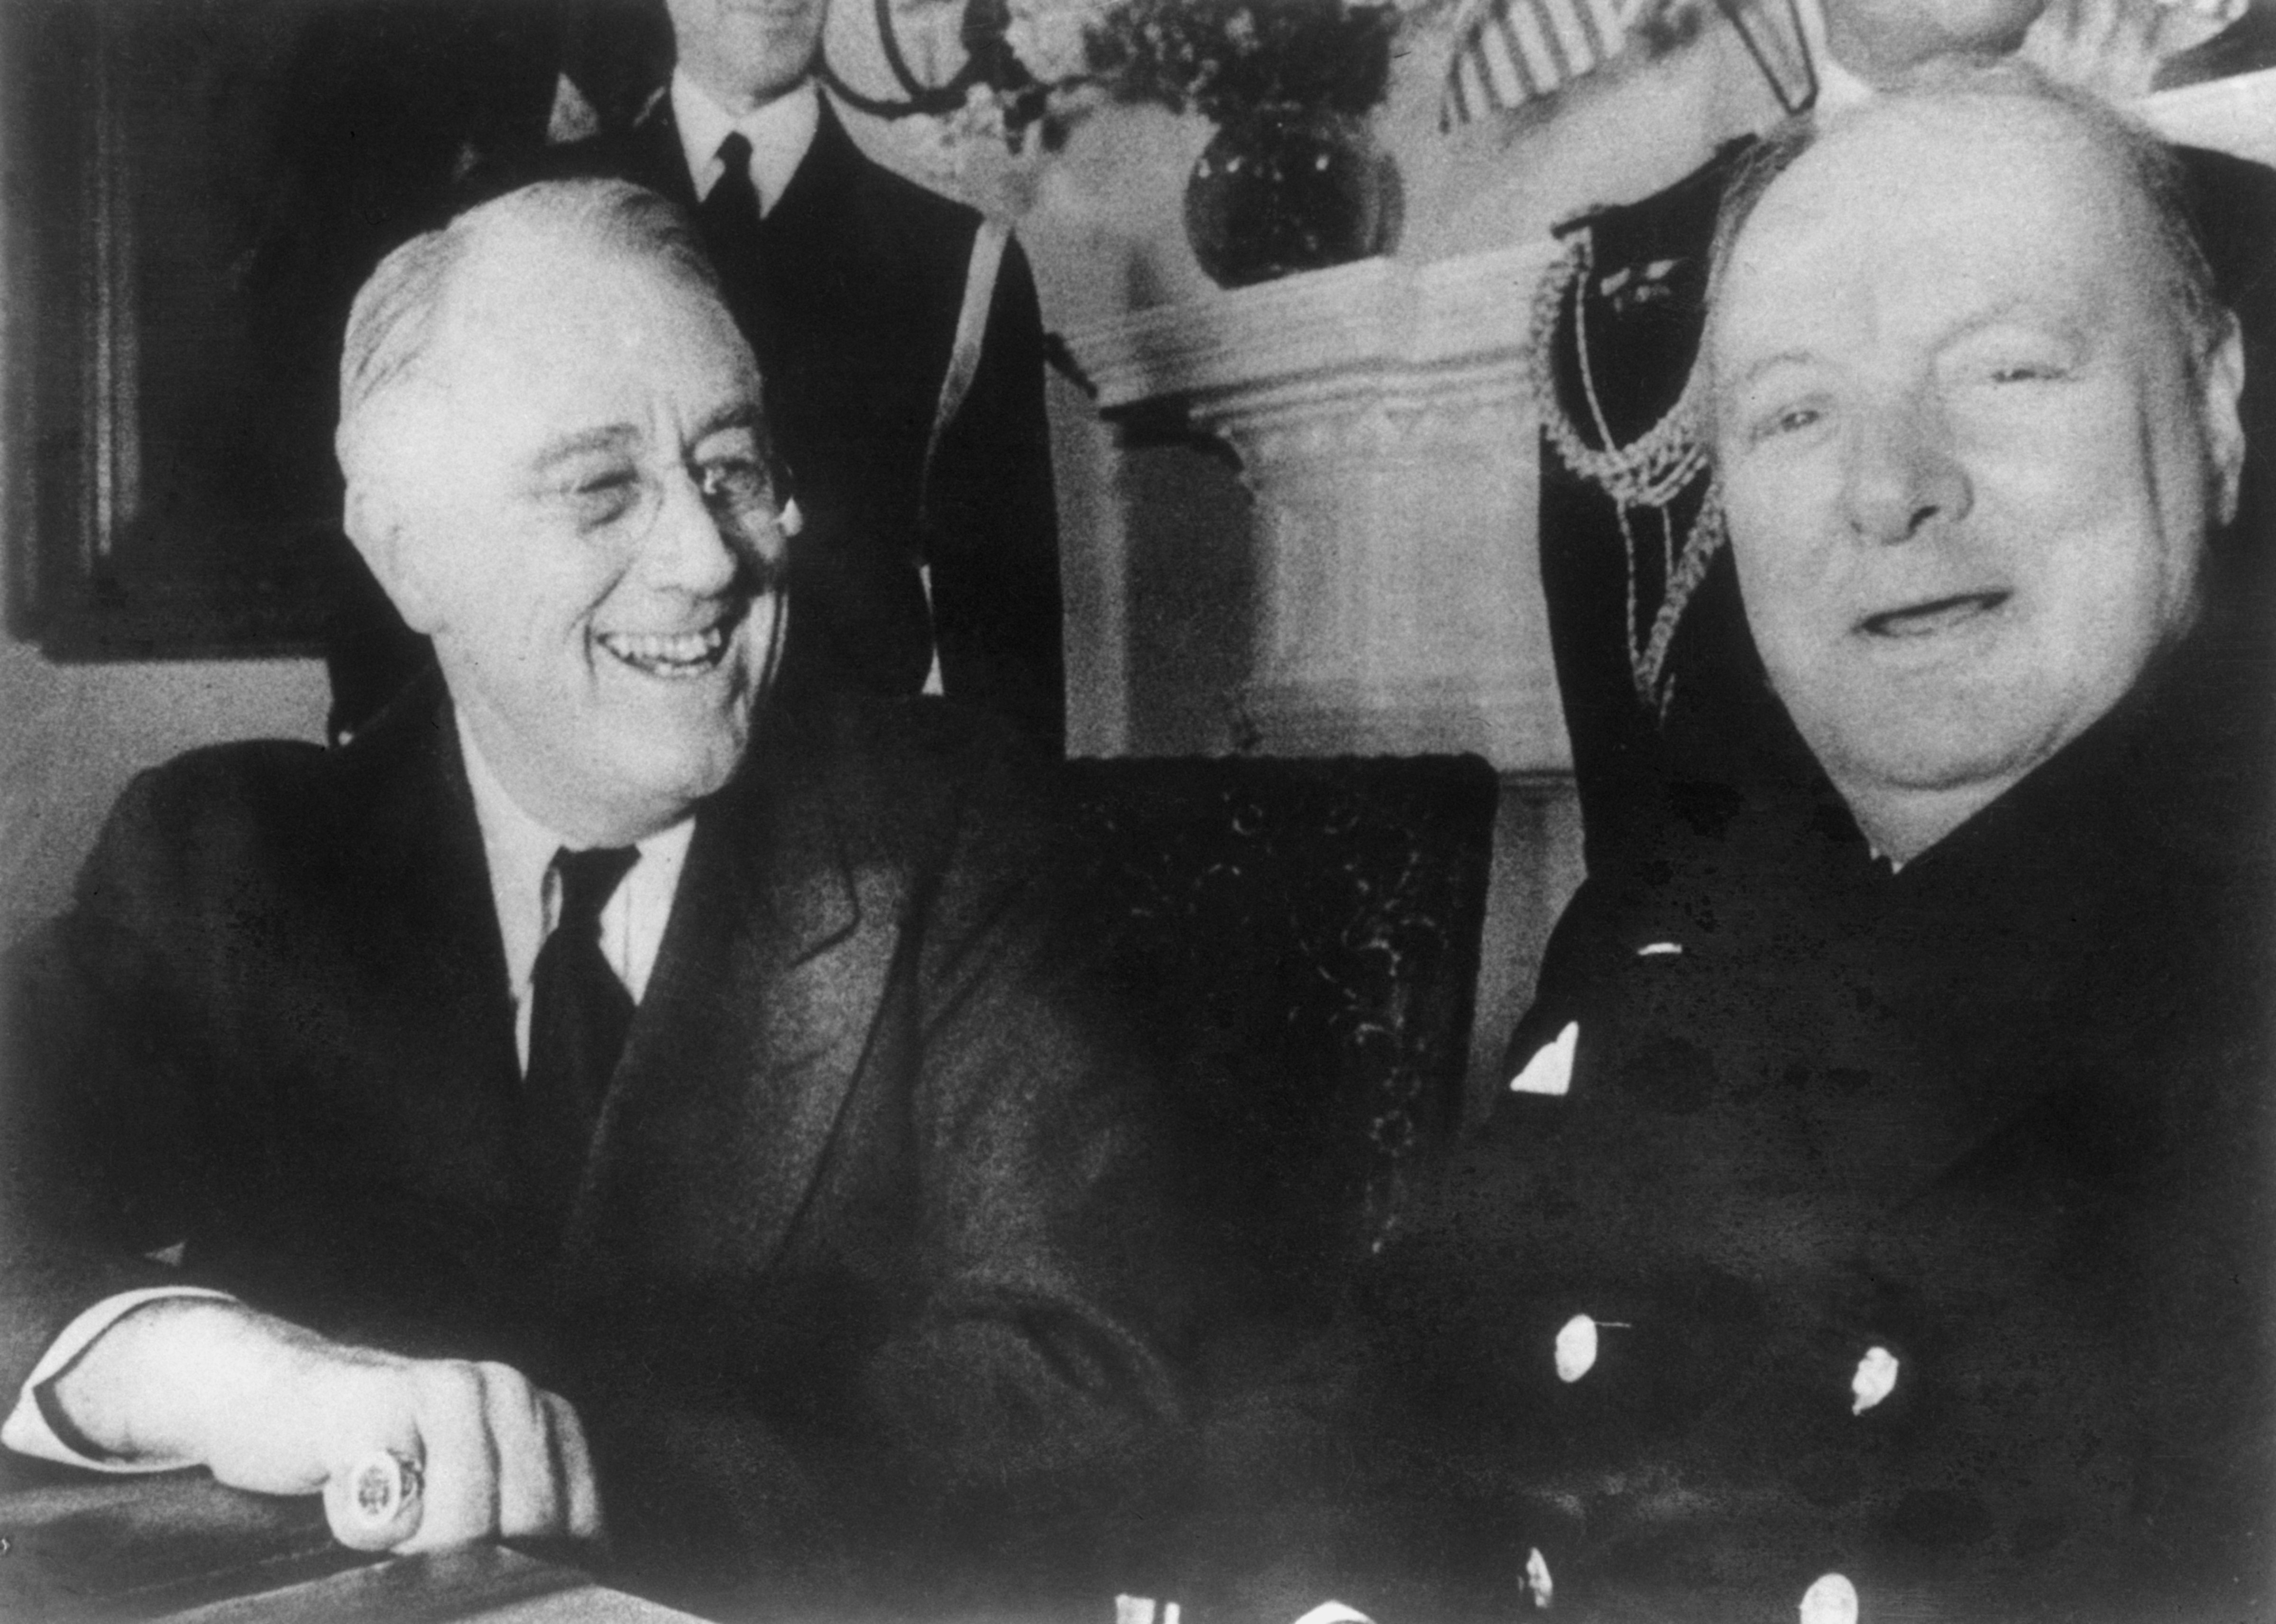 US President Franklin D. Roosevelt (1882 - 1945, left) with British Prime Minister Winston Churchill (1874 - 1965) at the White House, Washington DC, December 1941.